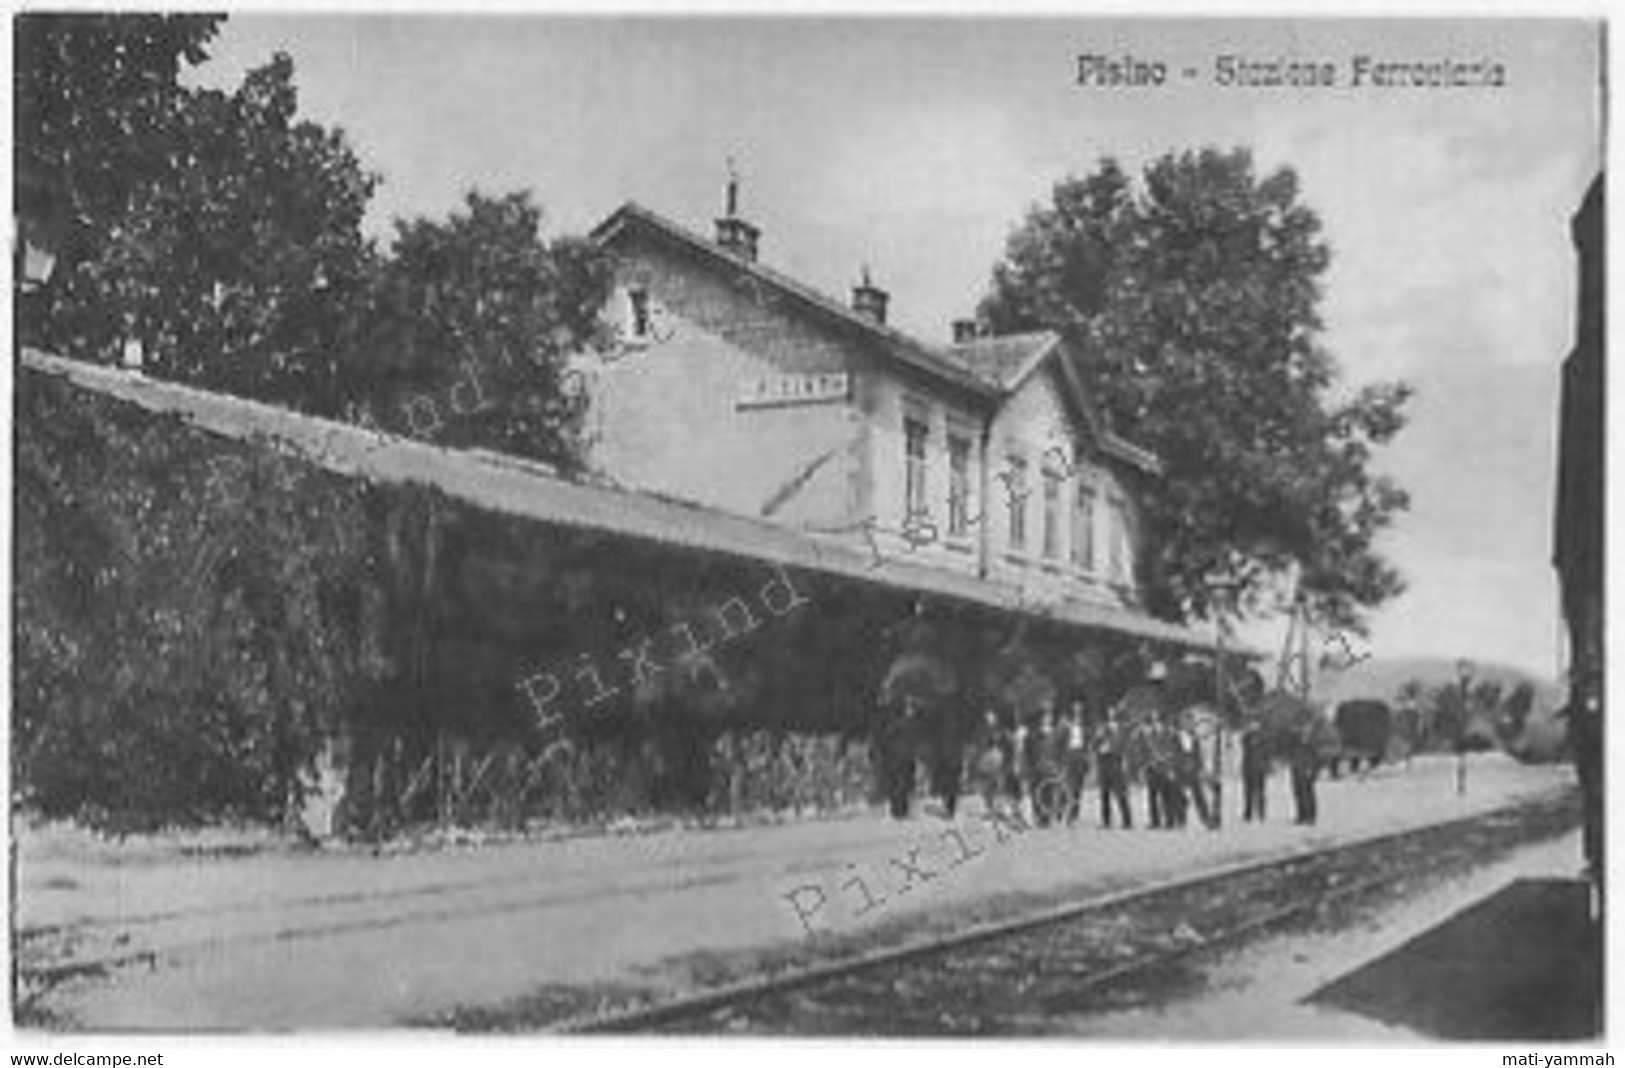 091_001 1930 Pisino - Istria - stazione - bahnhof - 1930.jpg